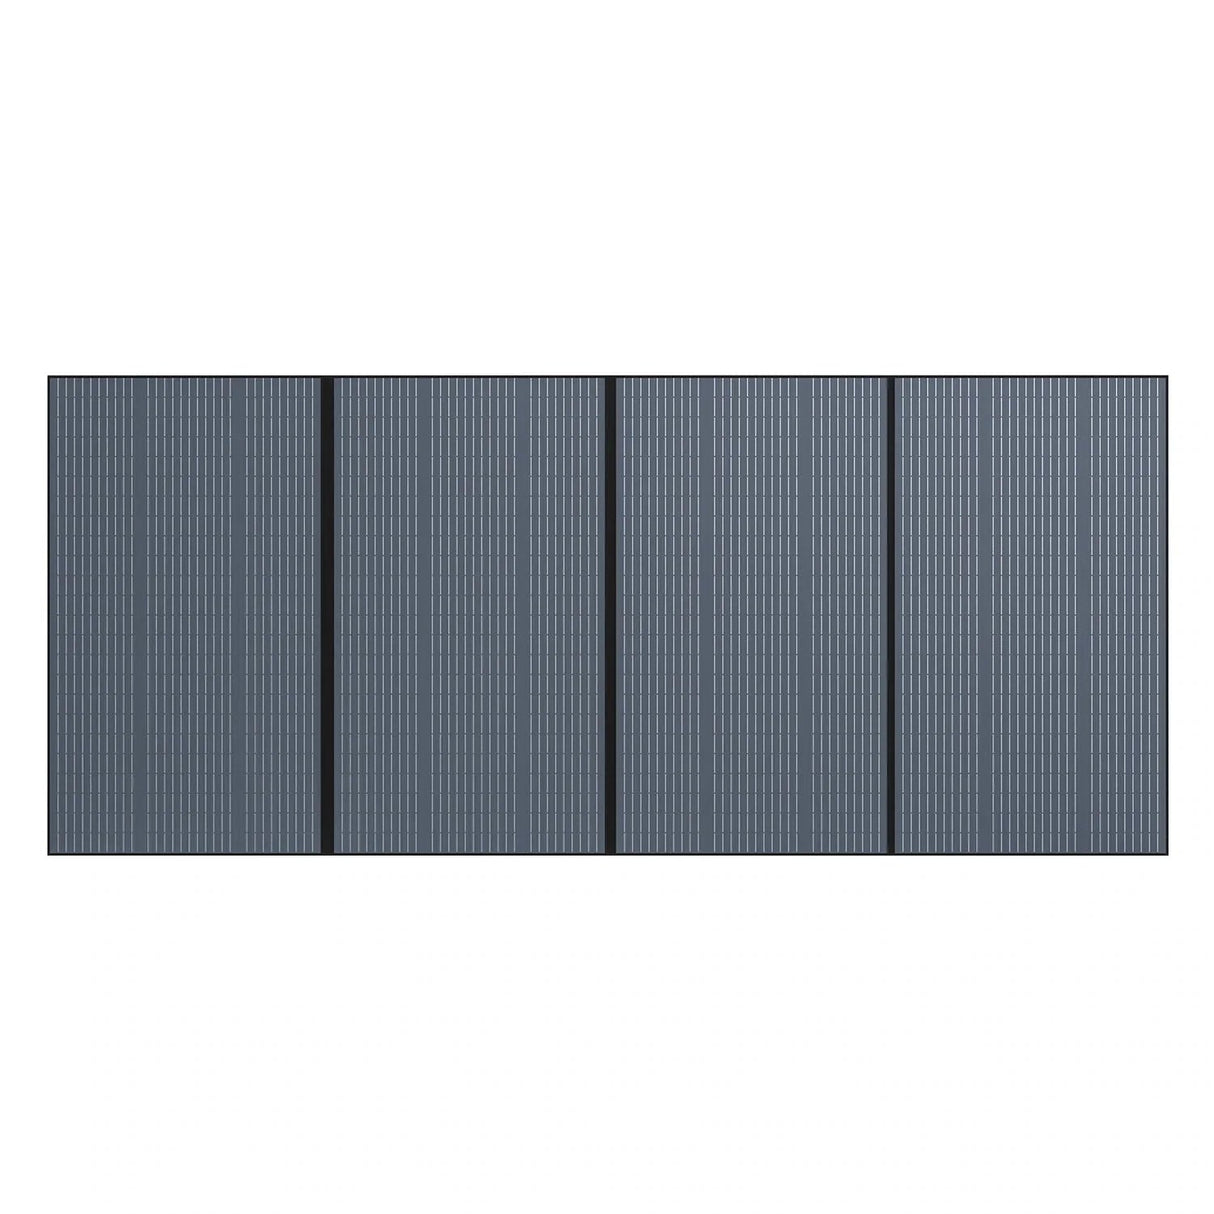 Bluetti PV350 Solar Panel | 350W Foldable Panel - BP-PV350 - Avanquil